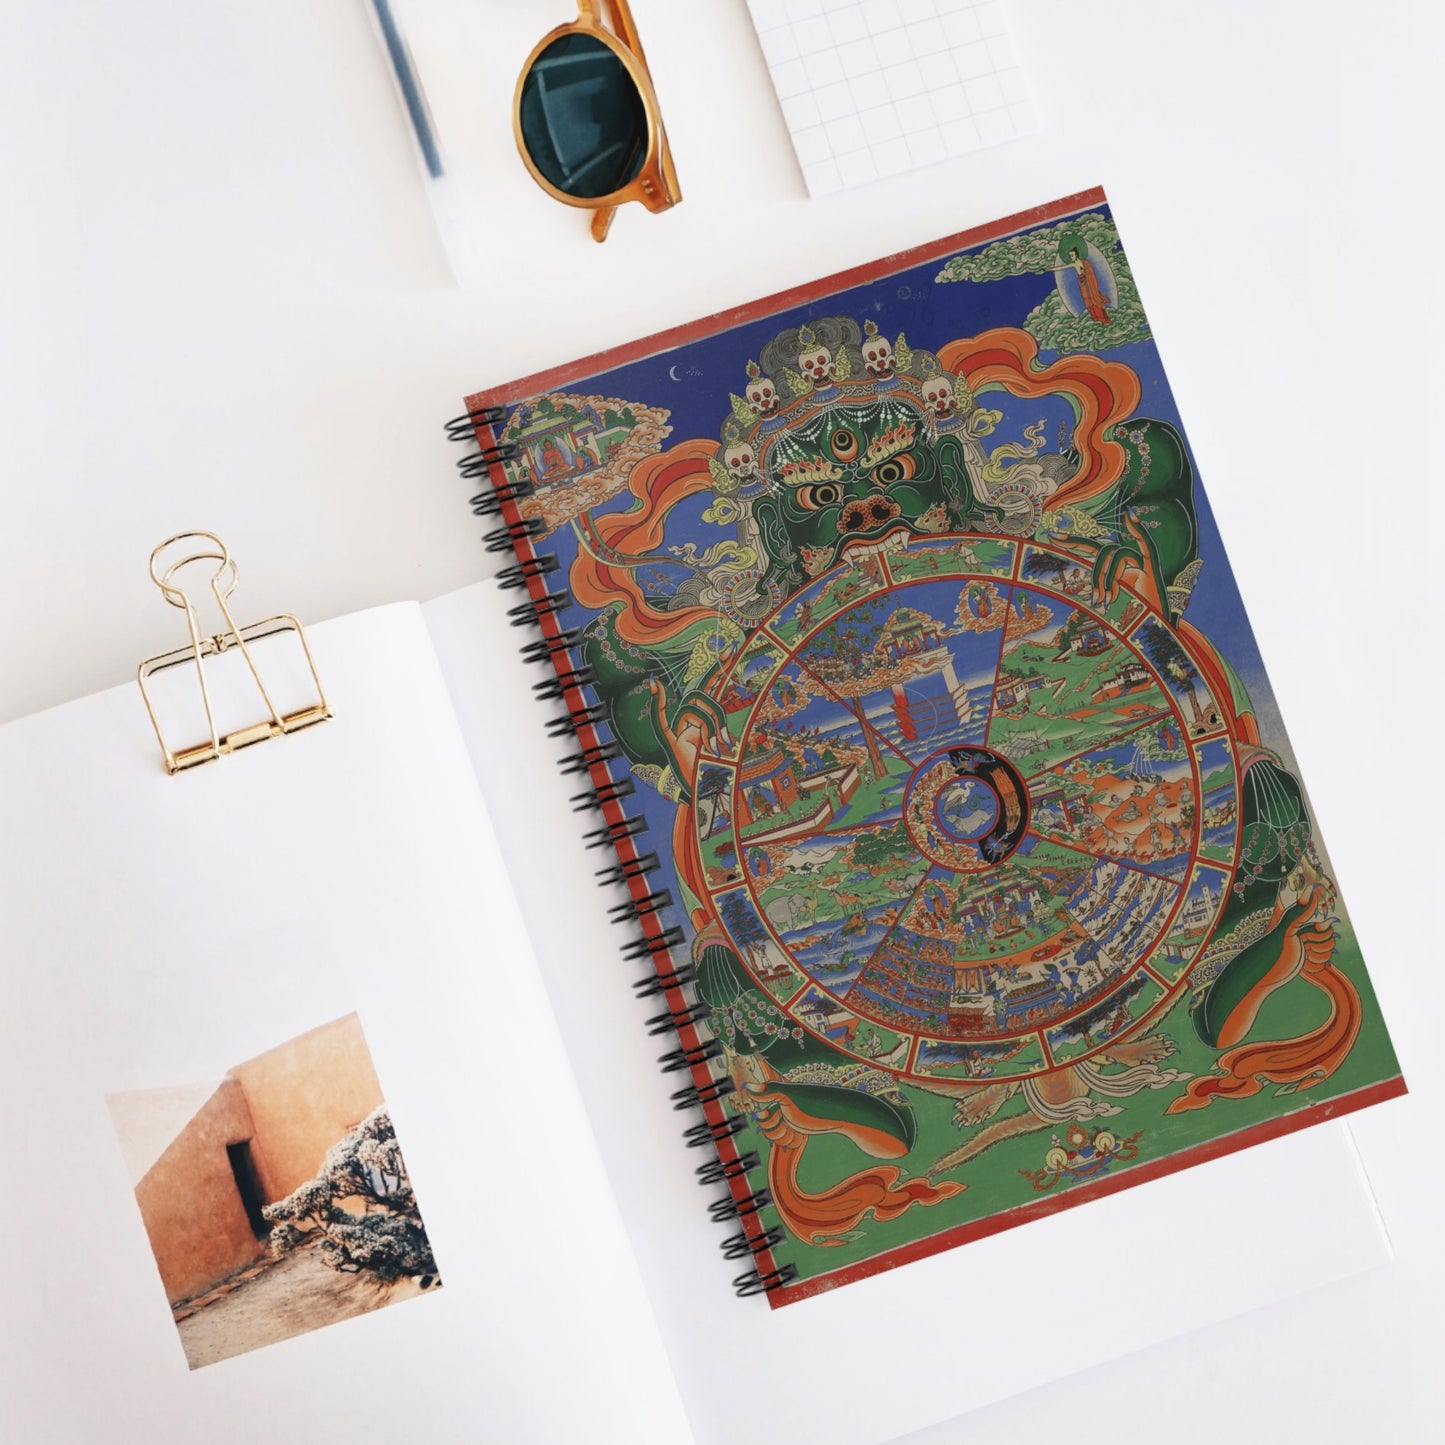 Tibetan Buddhist Spiral Notebook - Ruled Line